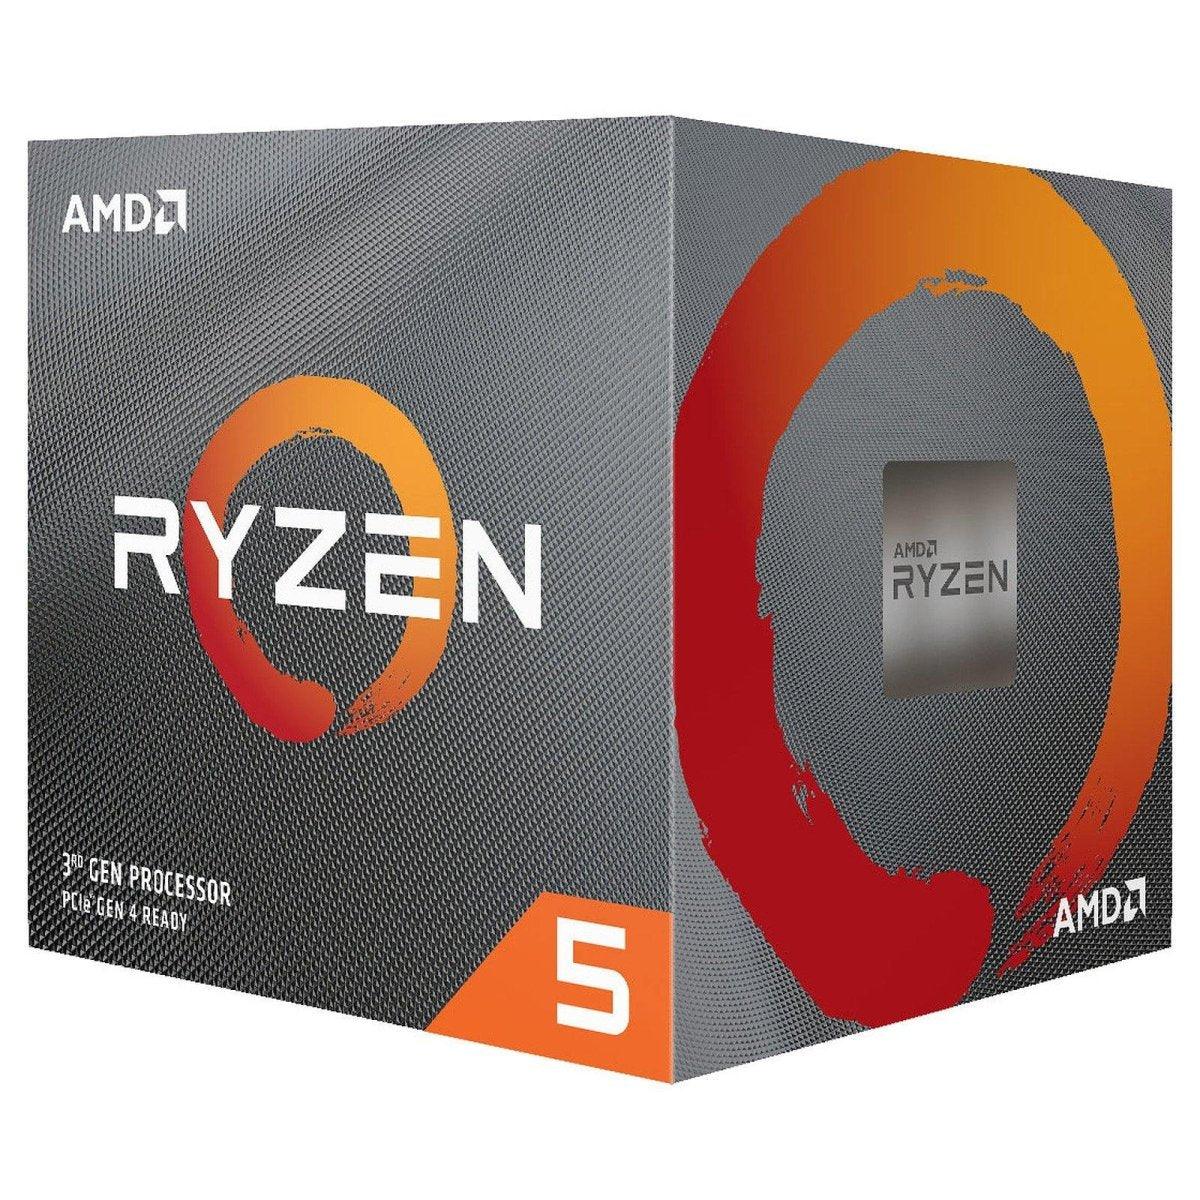 AMD Ryzen 5 3600 Wraith Stealth Maroc Prix Processeur pas cher - smartmarket.ma